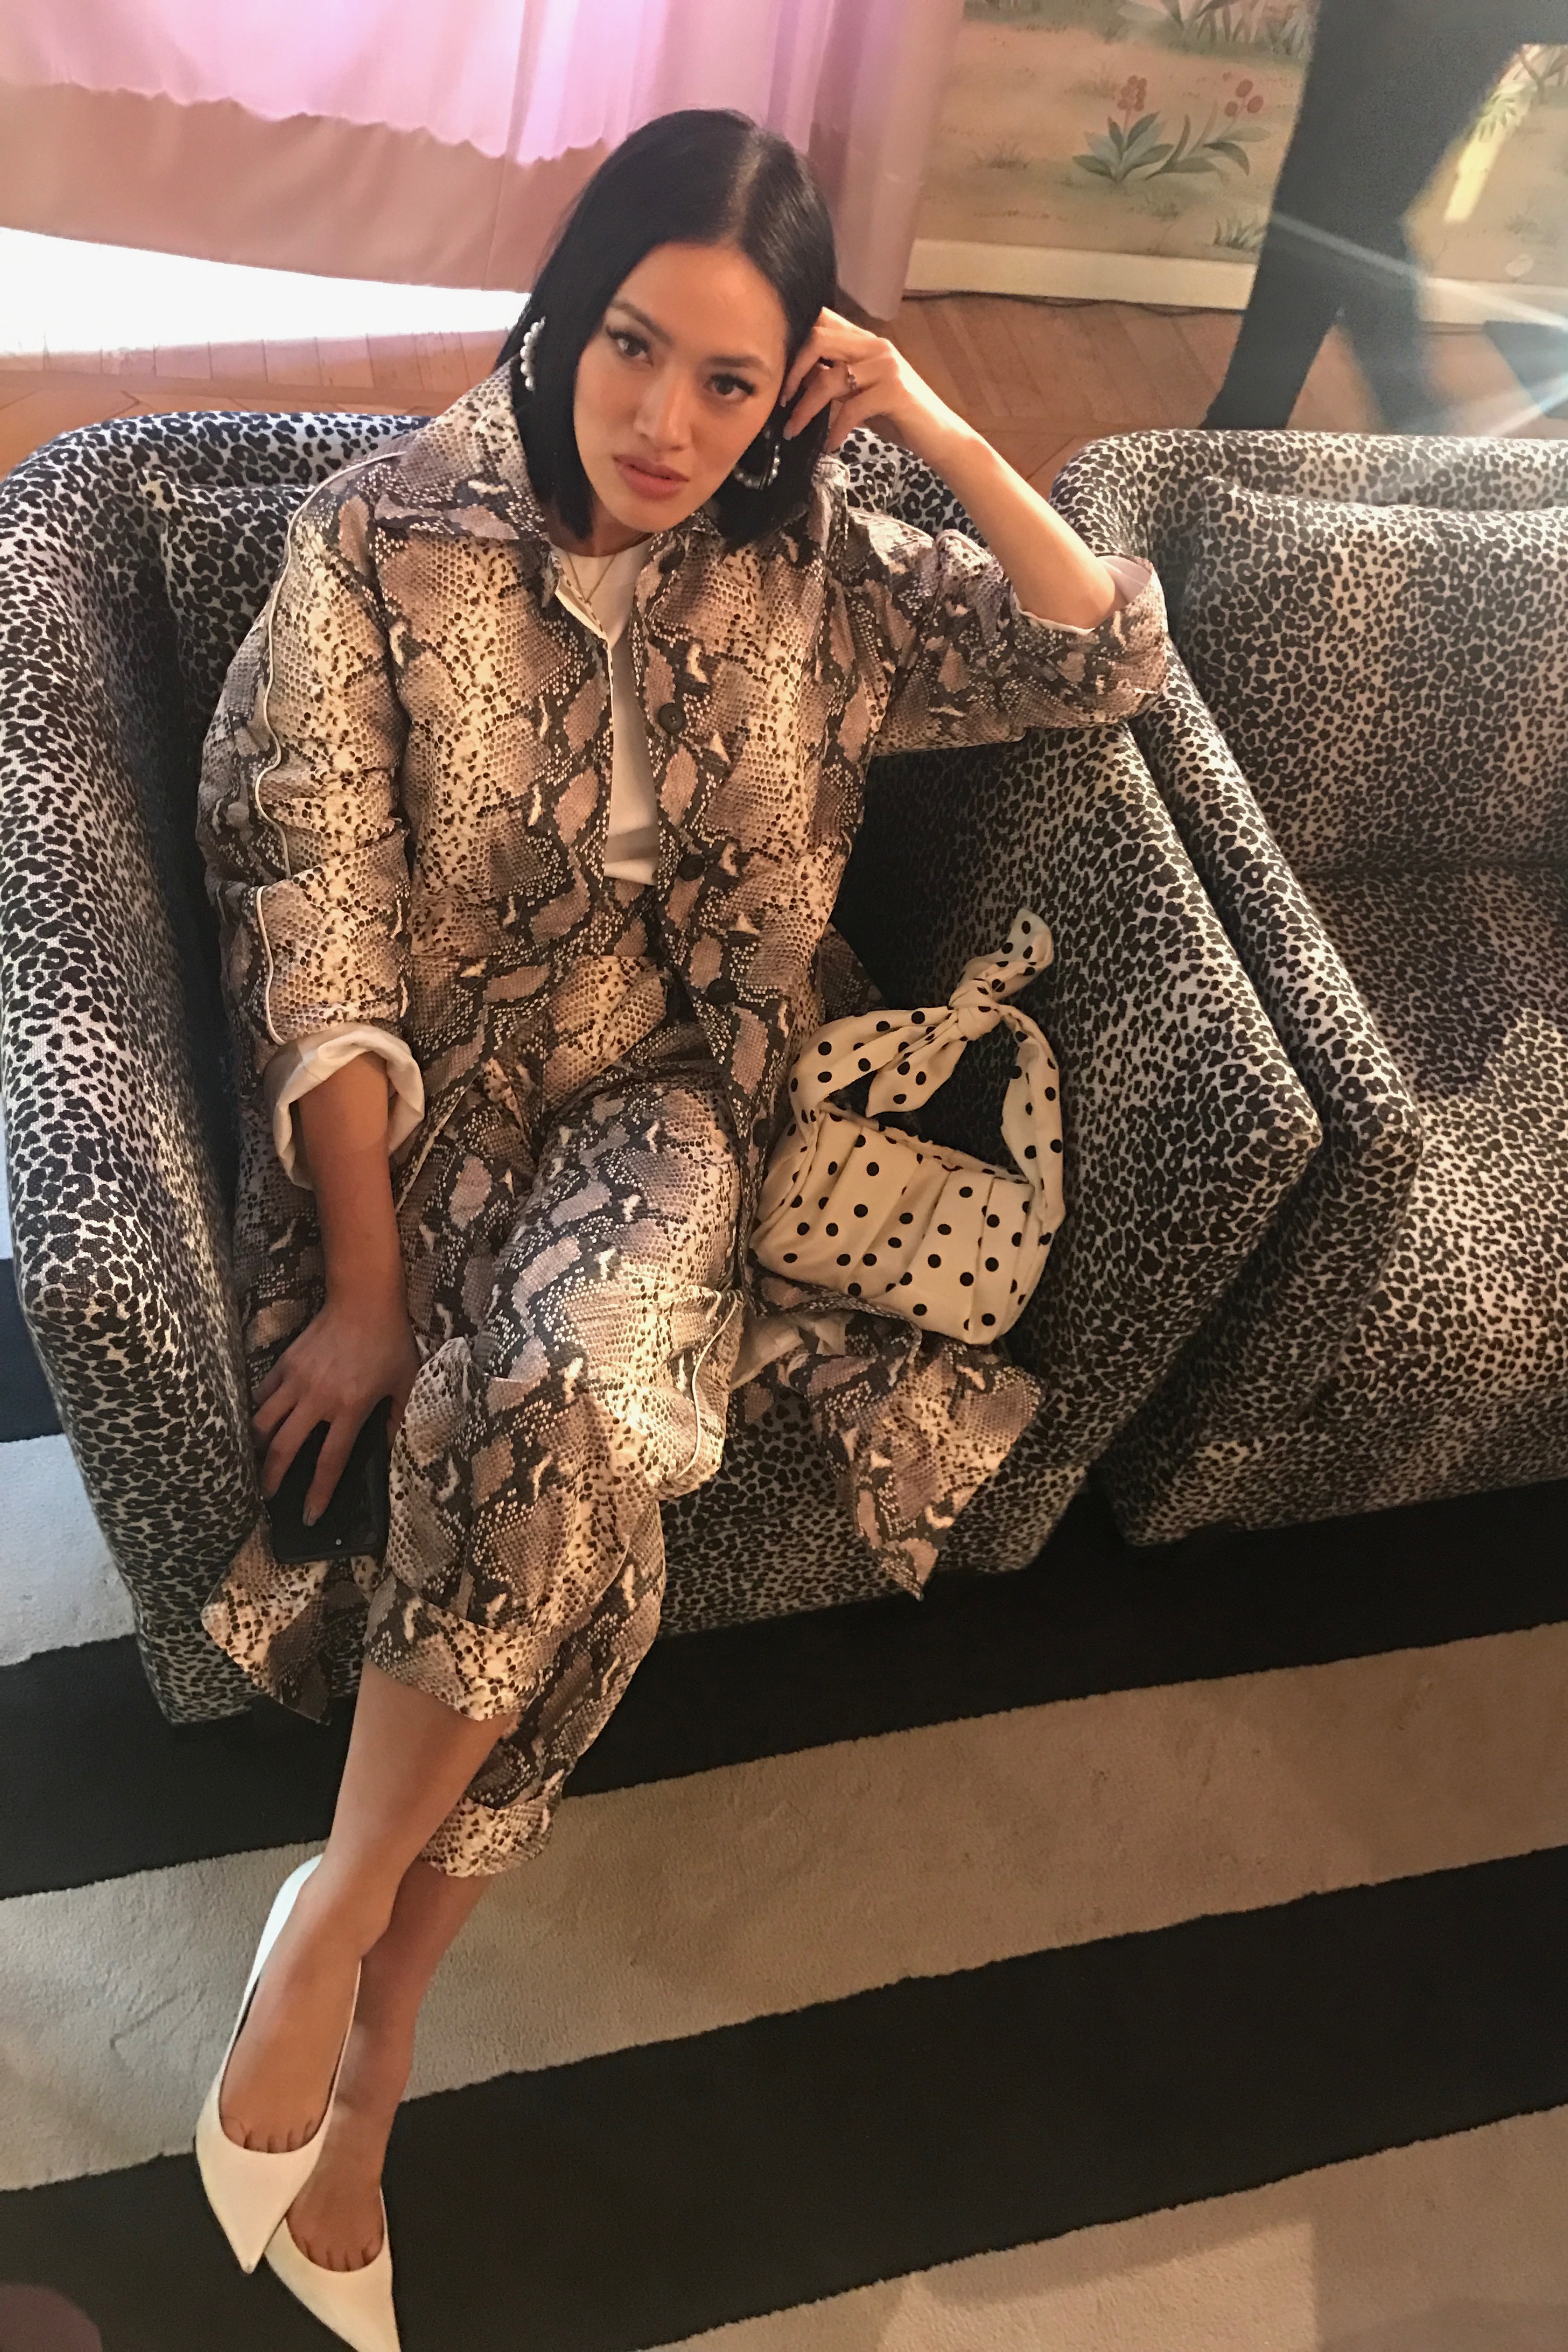 Milan Fashion Week Fall/Winter 2019 Photo Diary Tiffany Hsu Handinfire Mytheresa Buying Director MaxMara Prada Fendi Shows